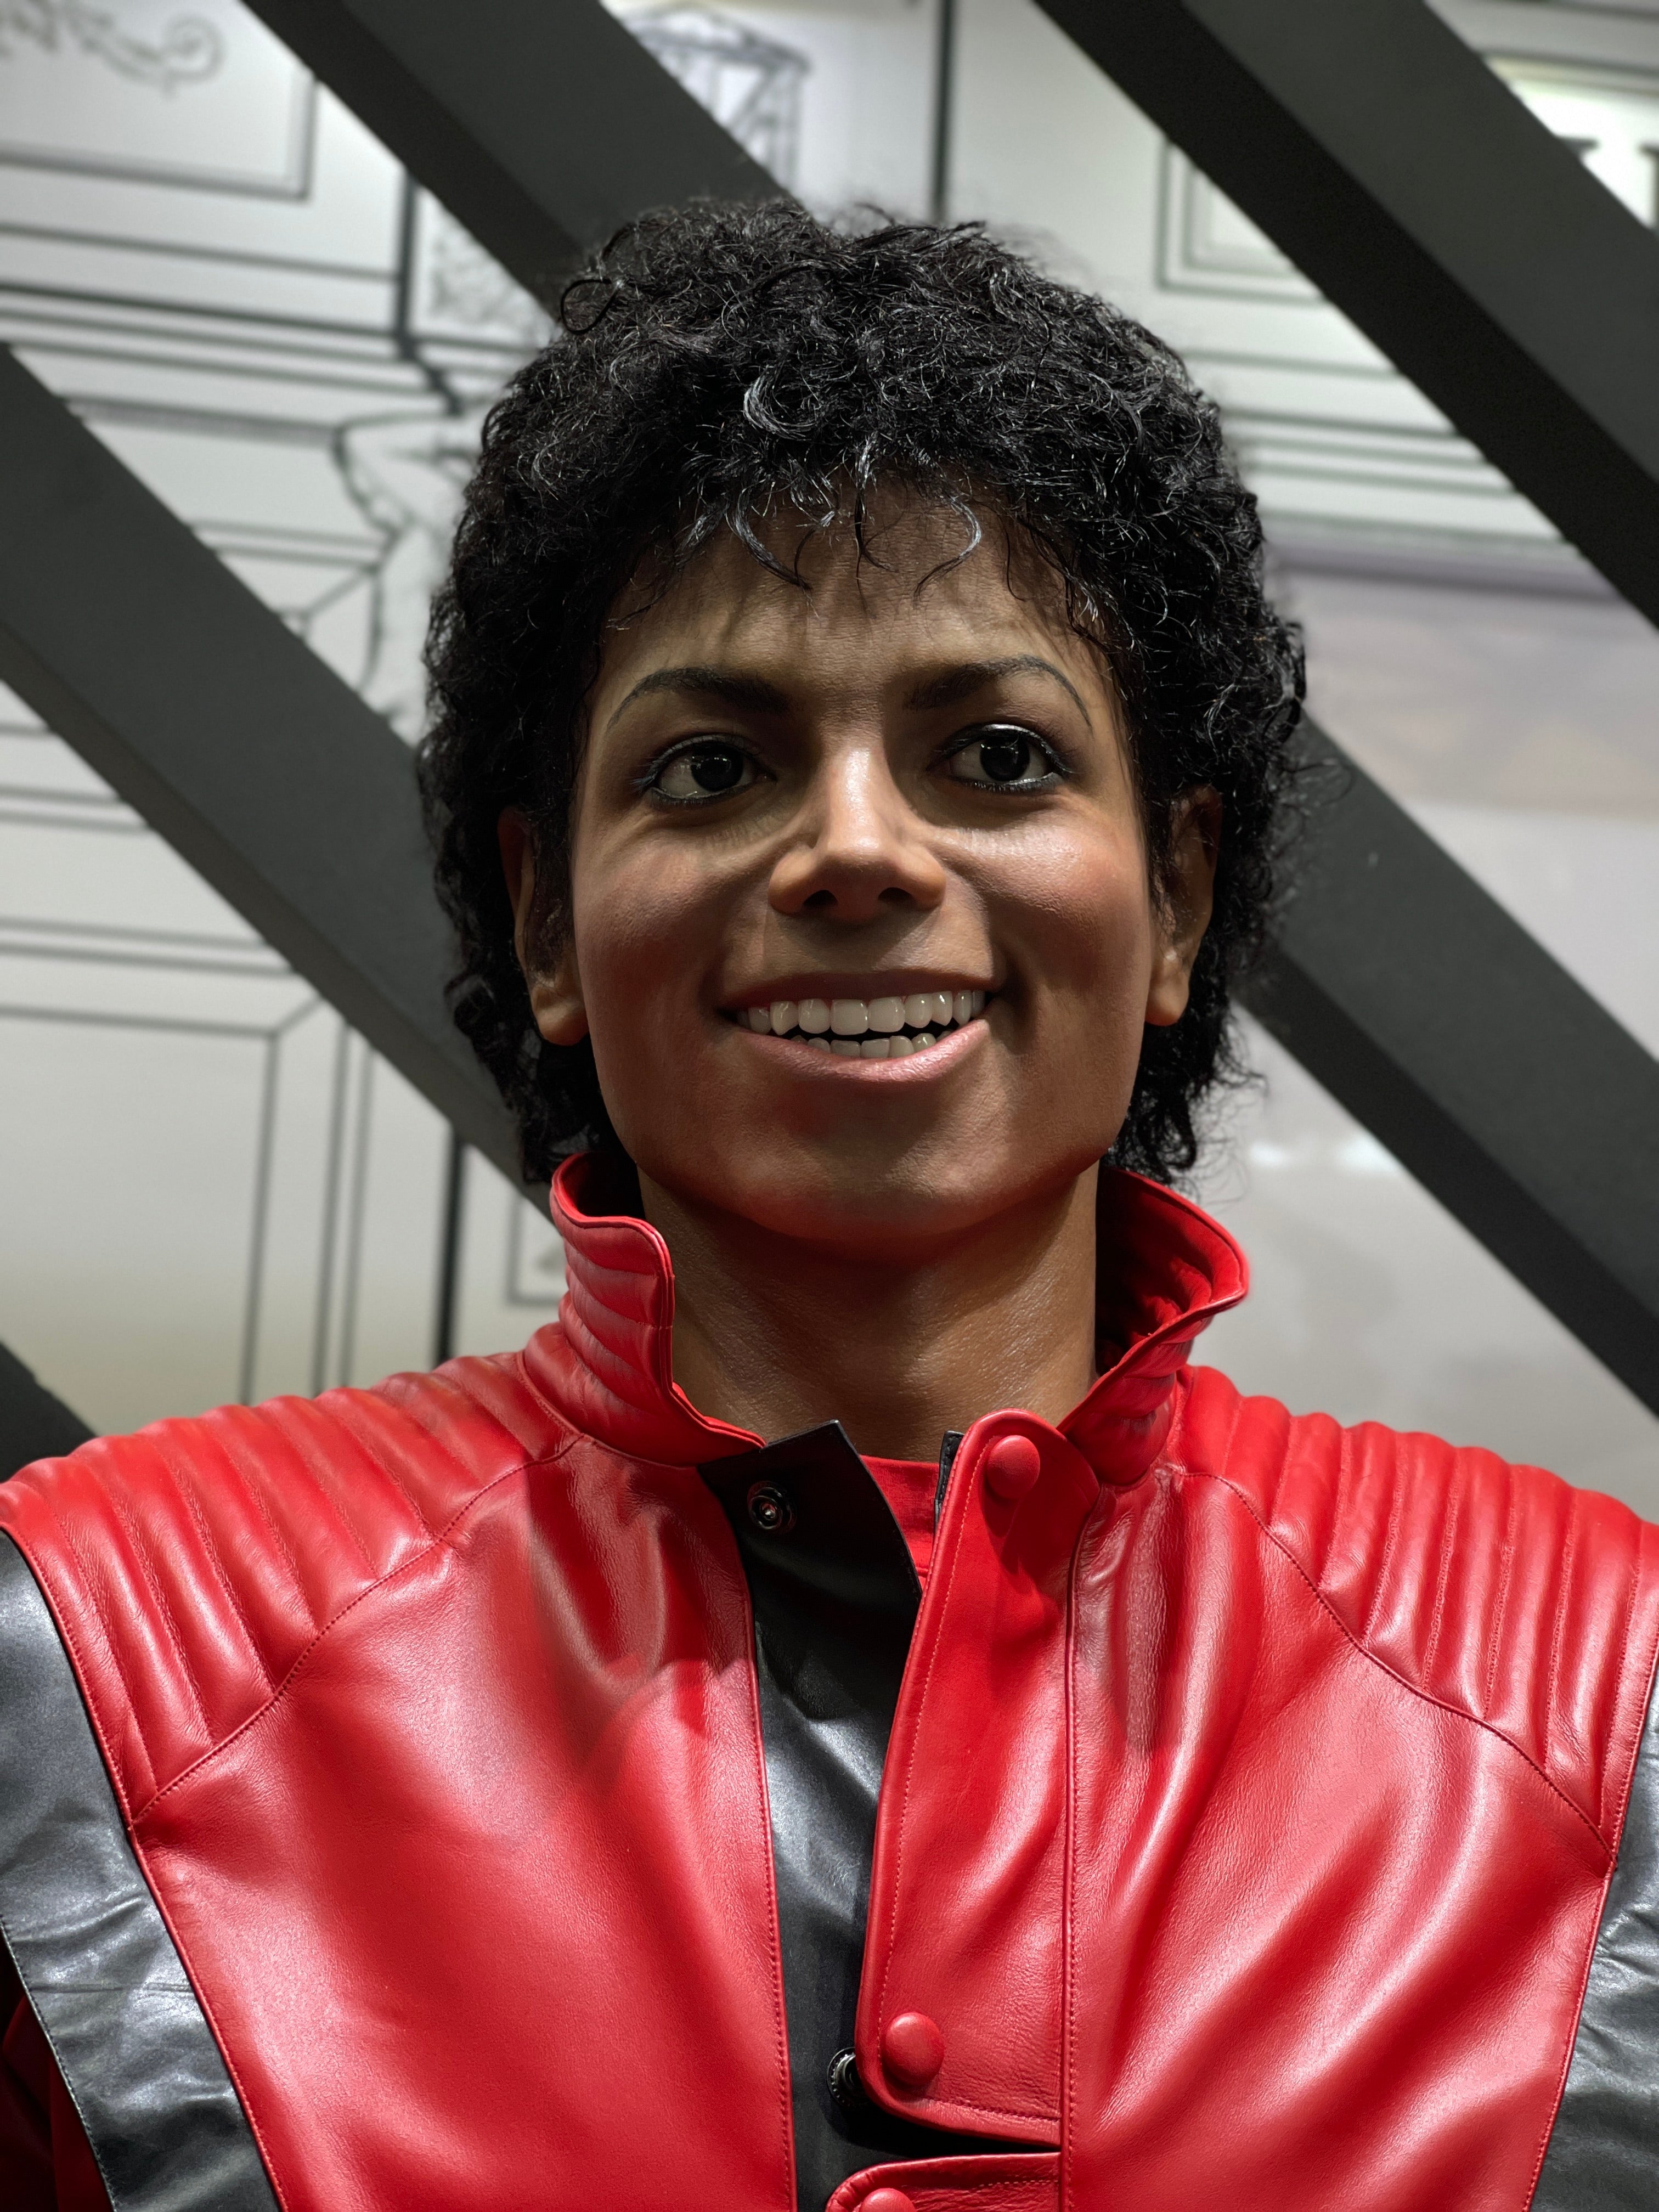 Michael Jackson Life-Size Bust